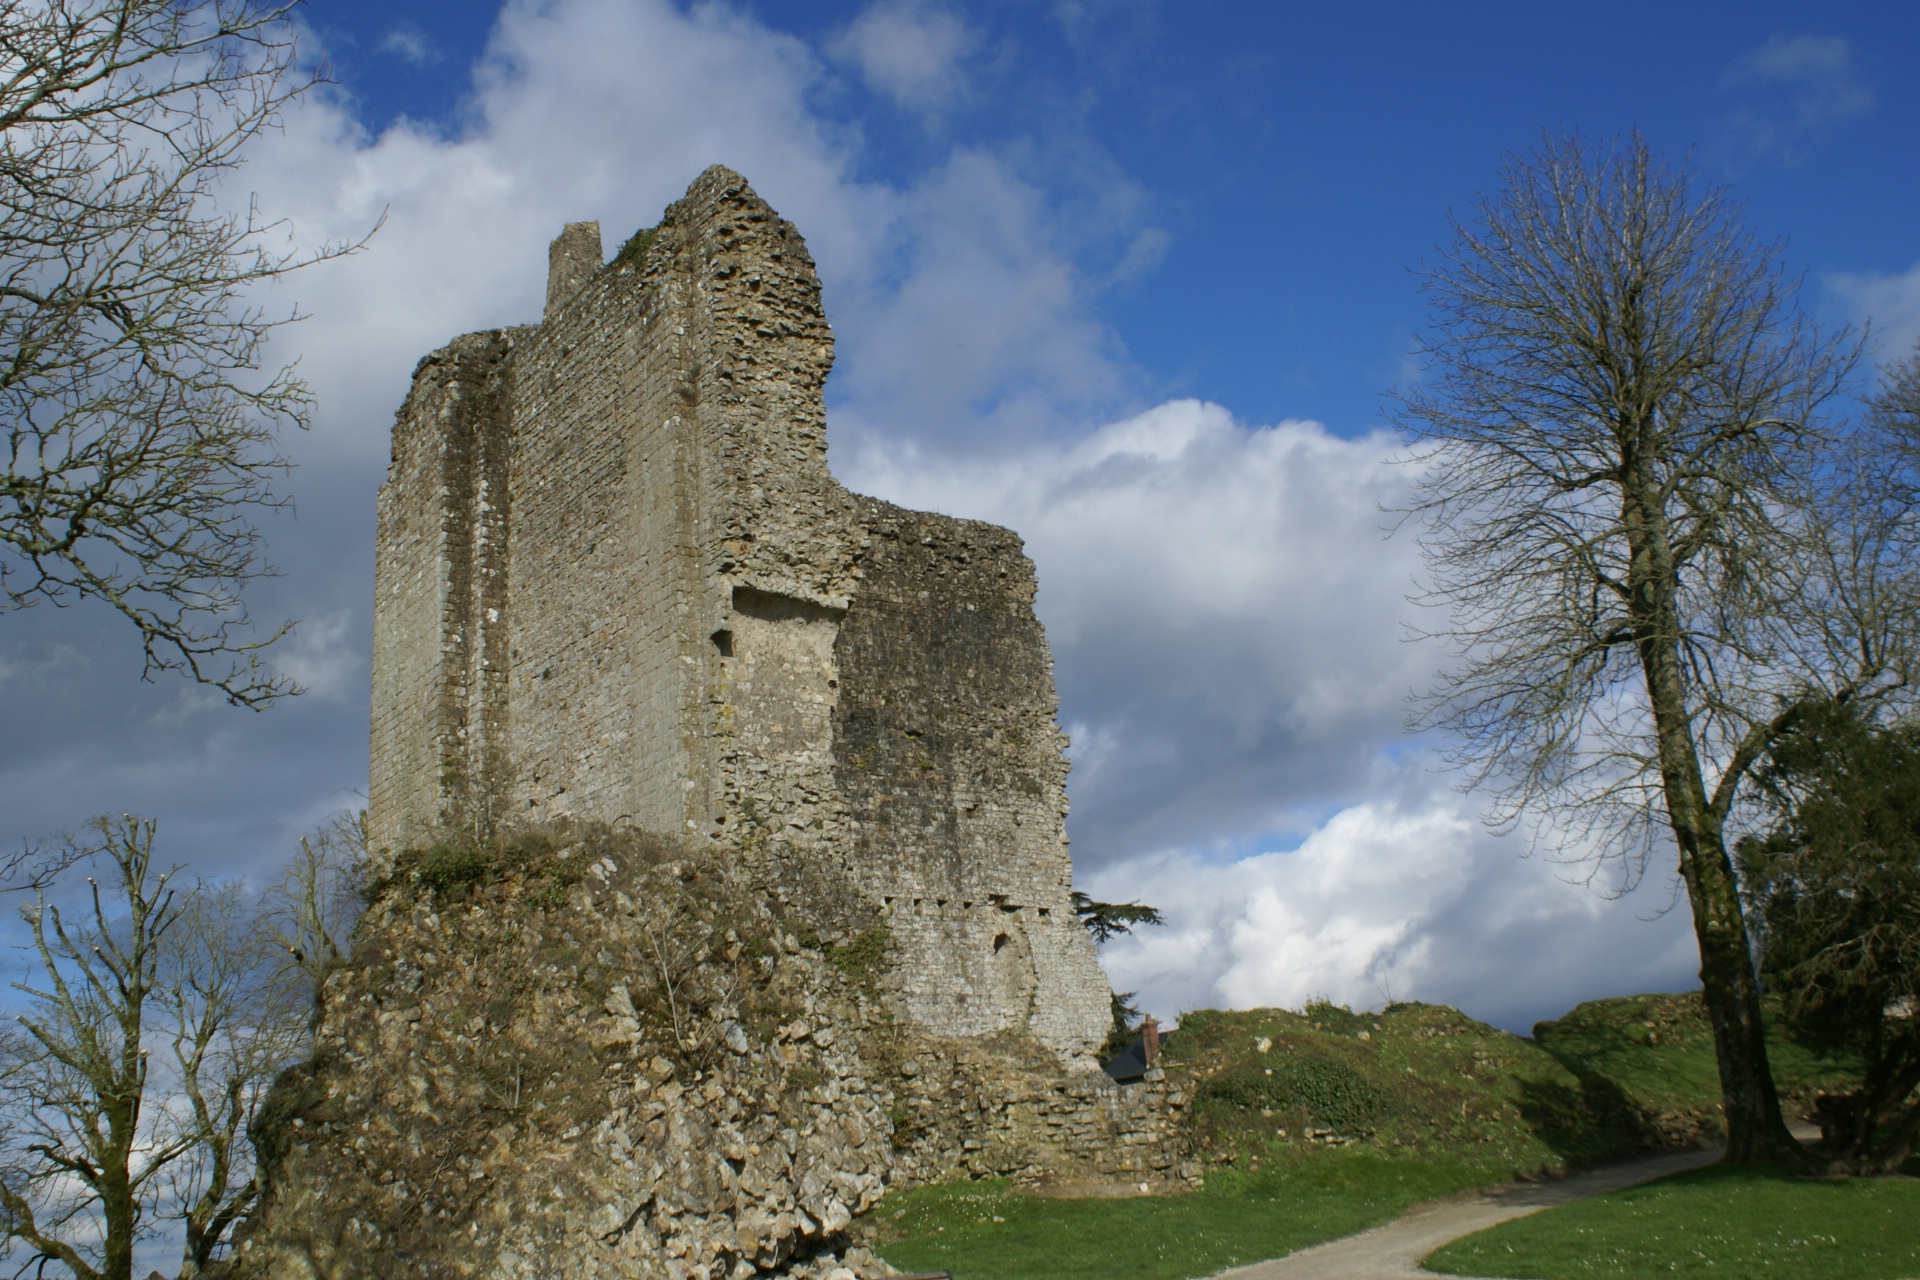 Domfront Castle, Normandy